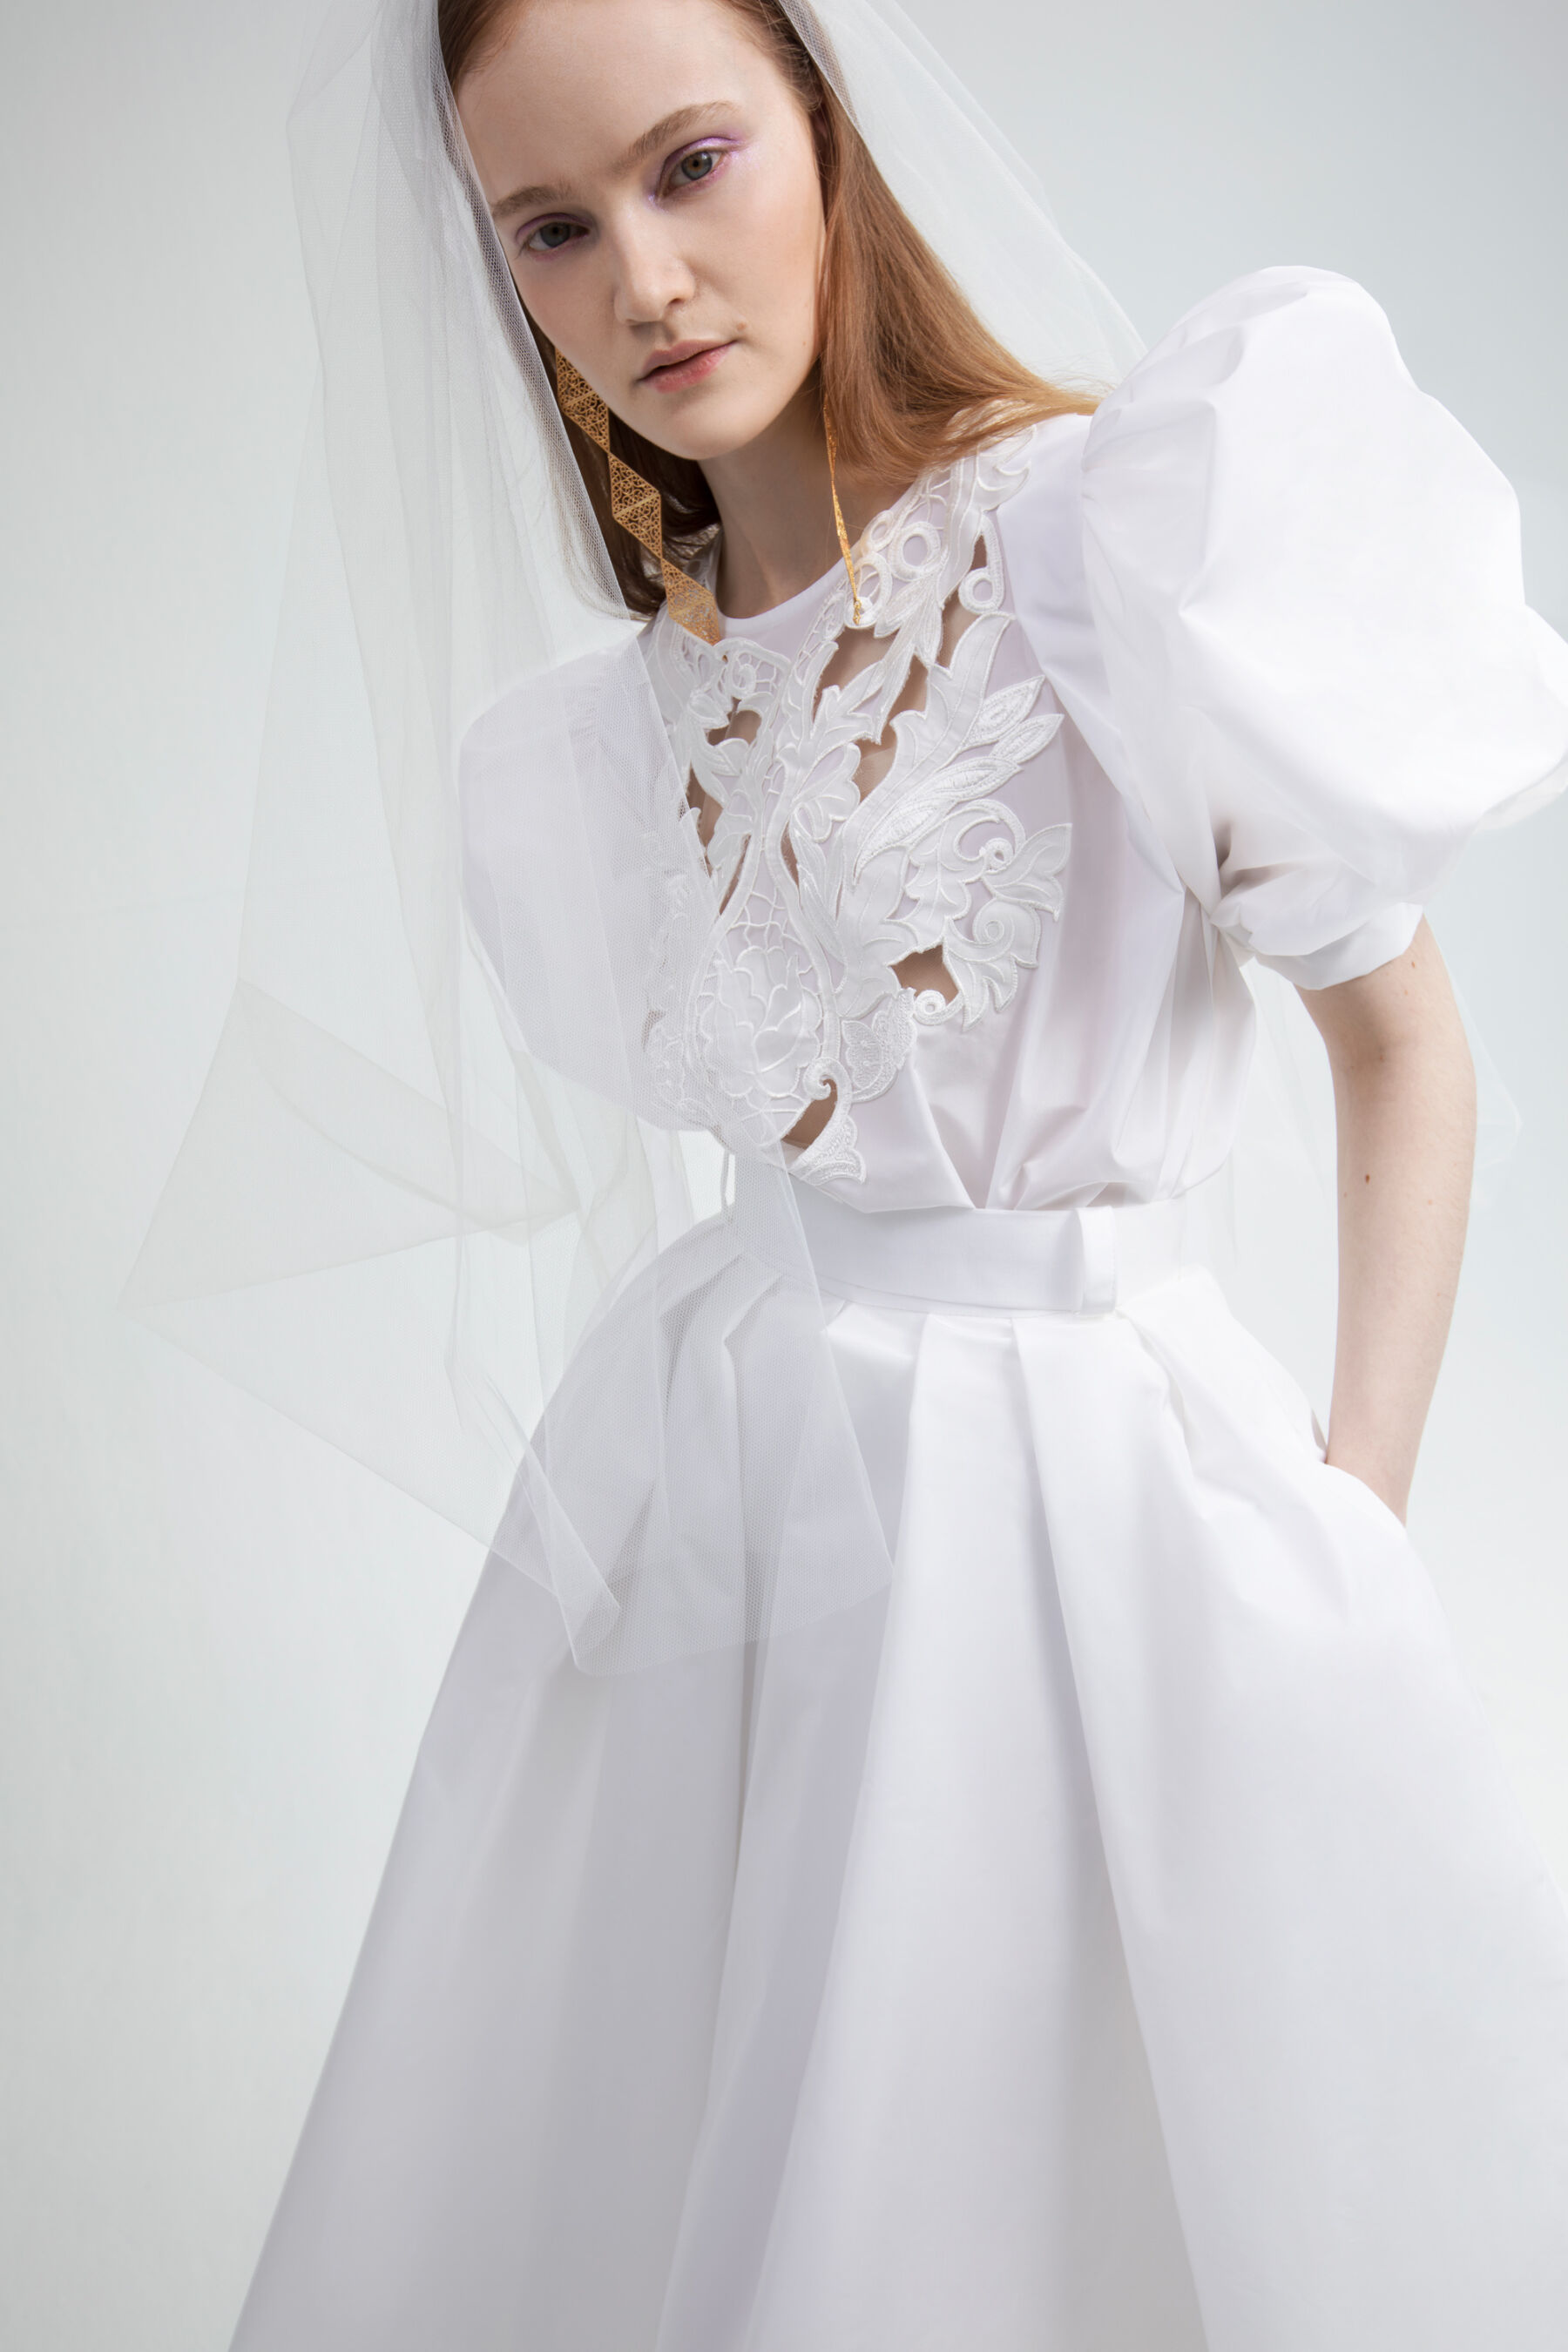 Yolan Cris contemporary wedding dress. Available at the Miss Bush pop up sample sale, April 2023.